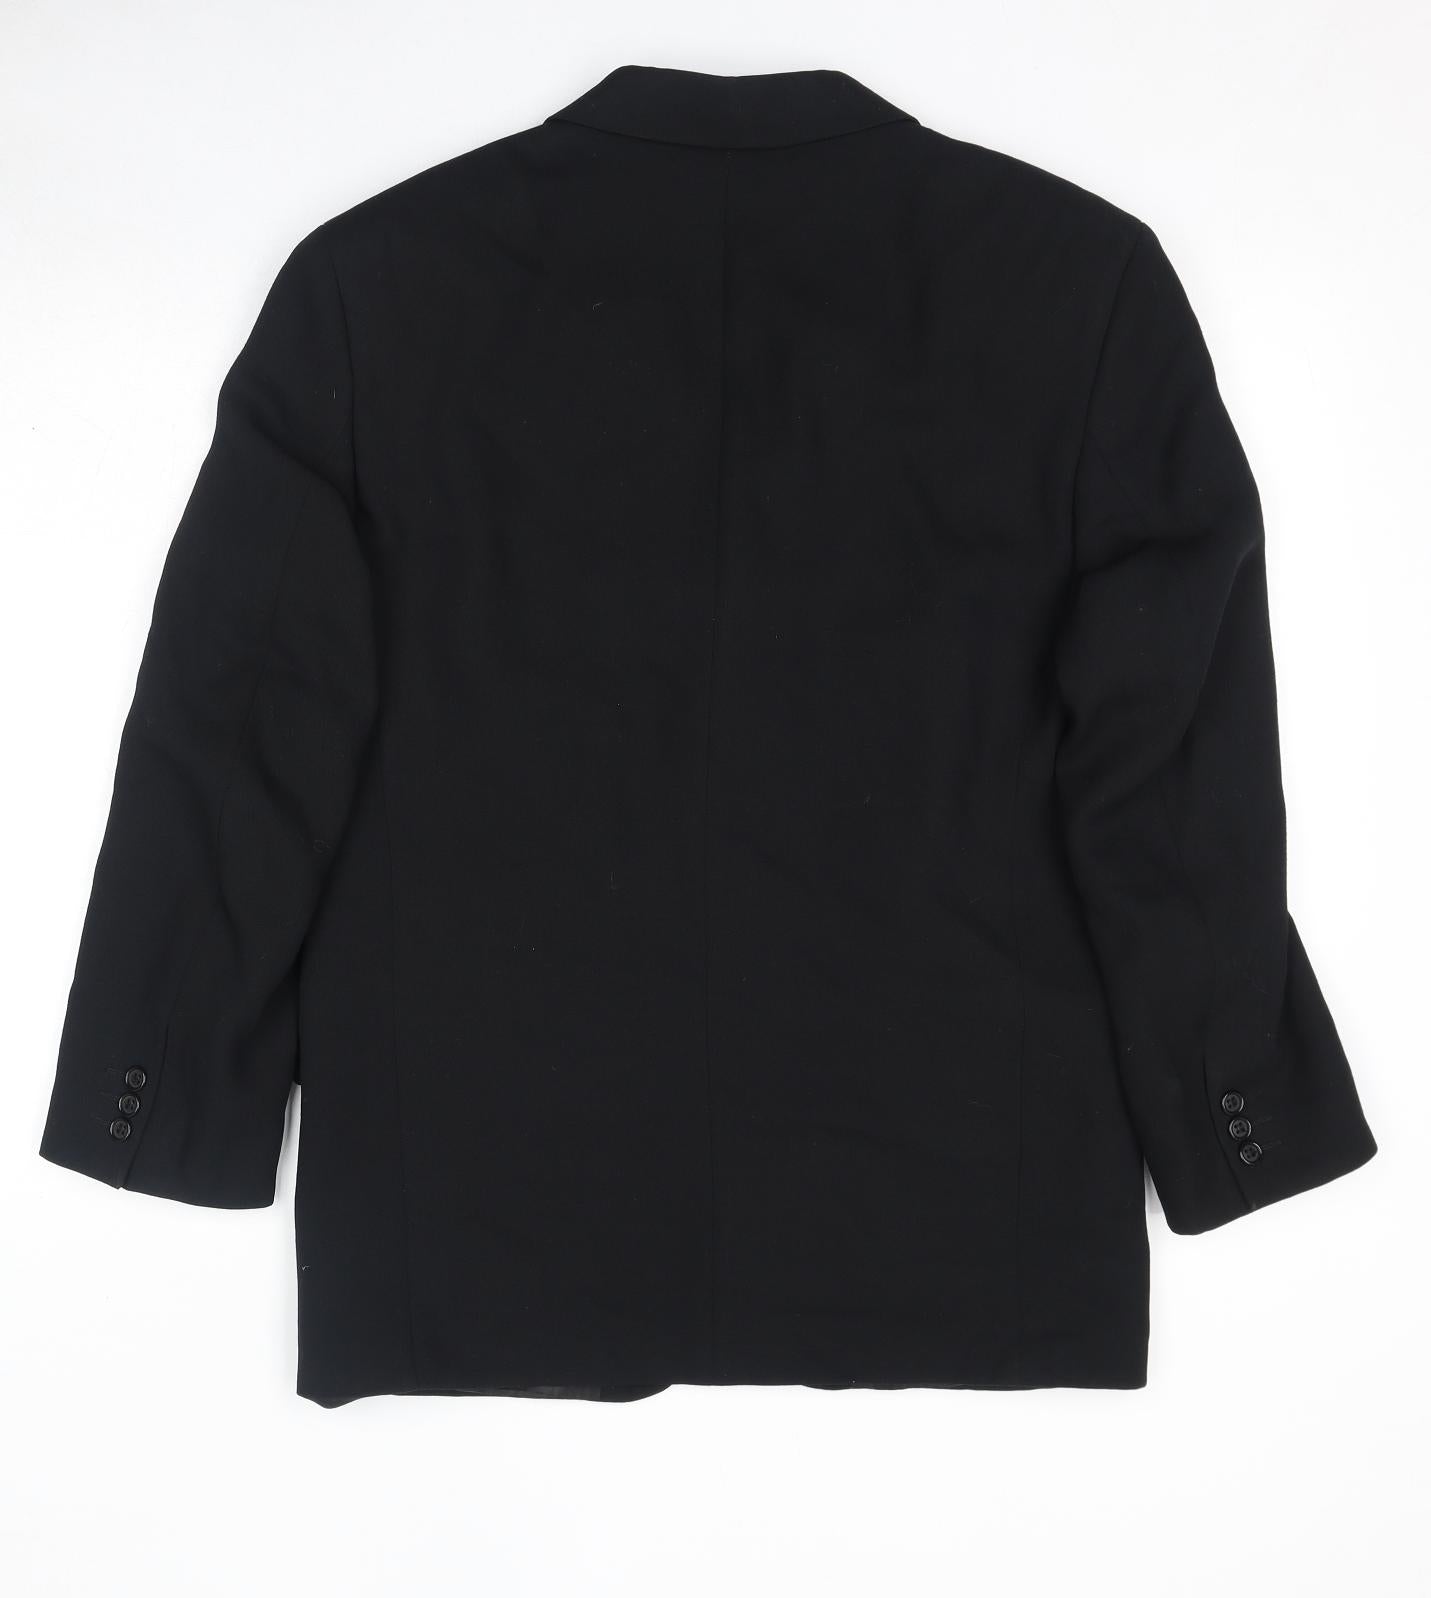 Maitland Mens Black Polyester Jacket Suit Jacket Size 38 Regular